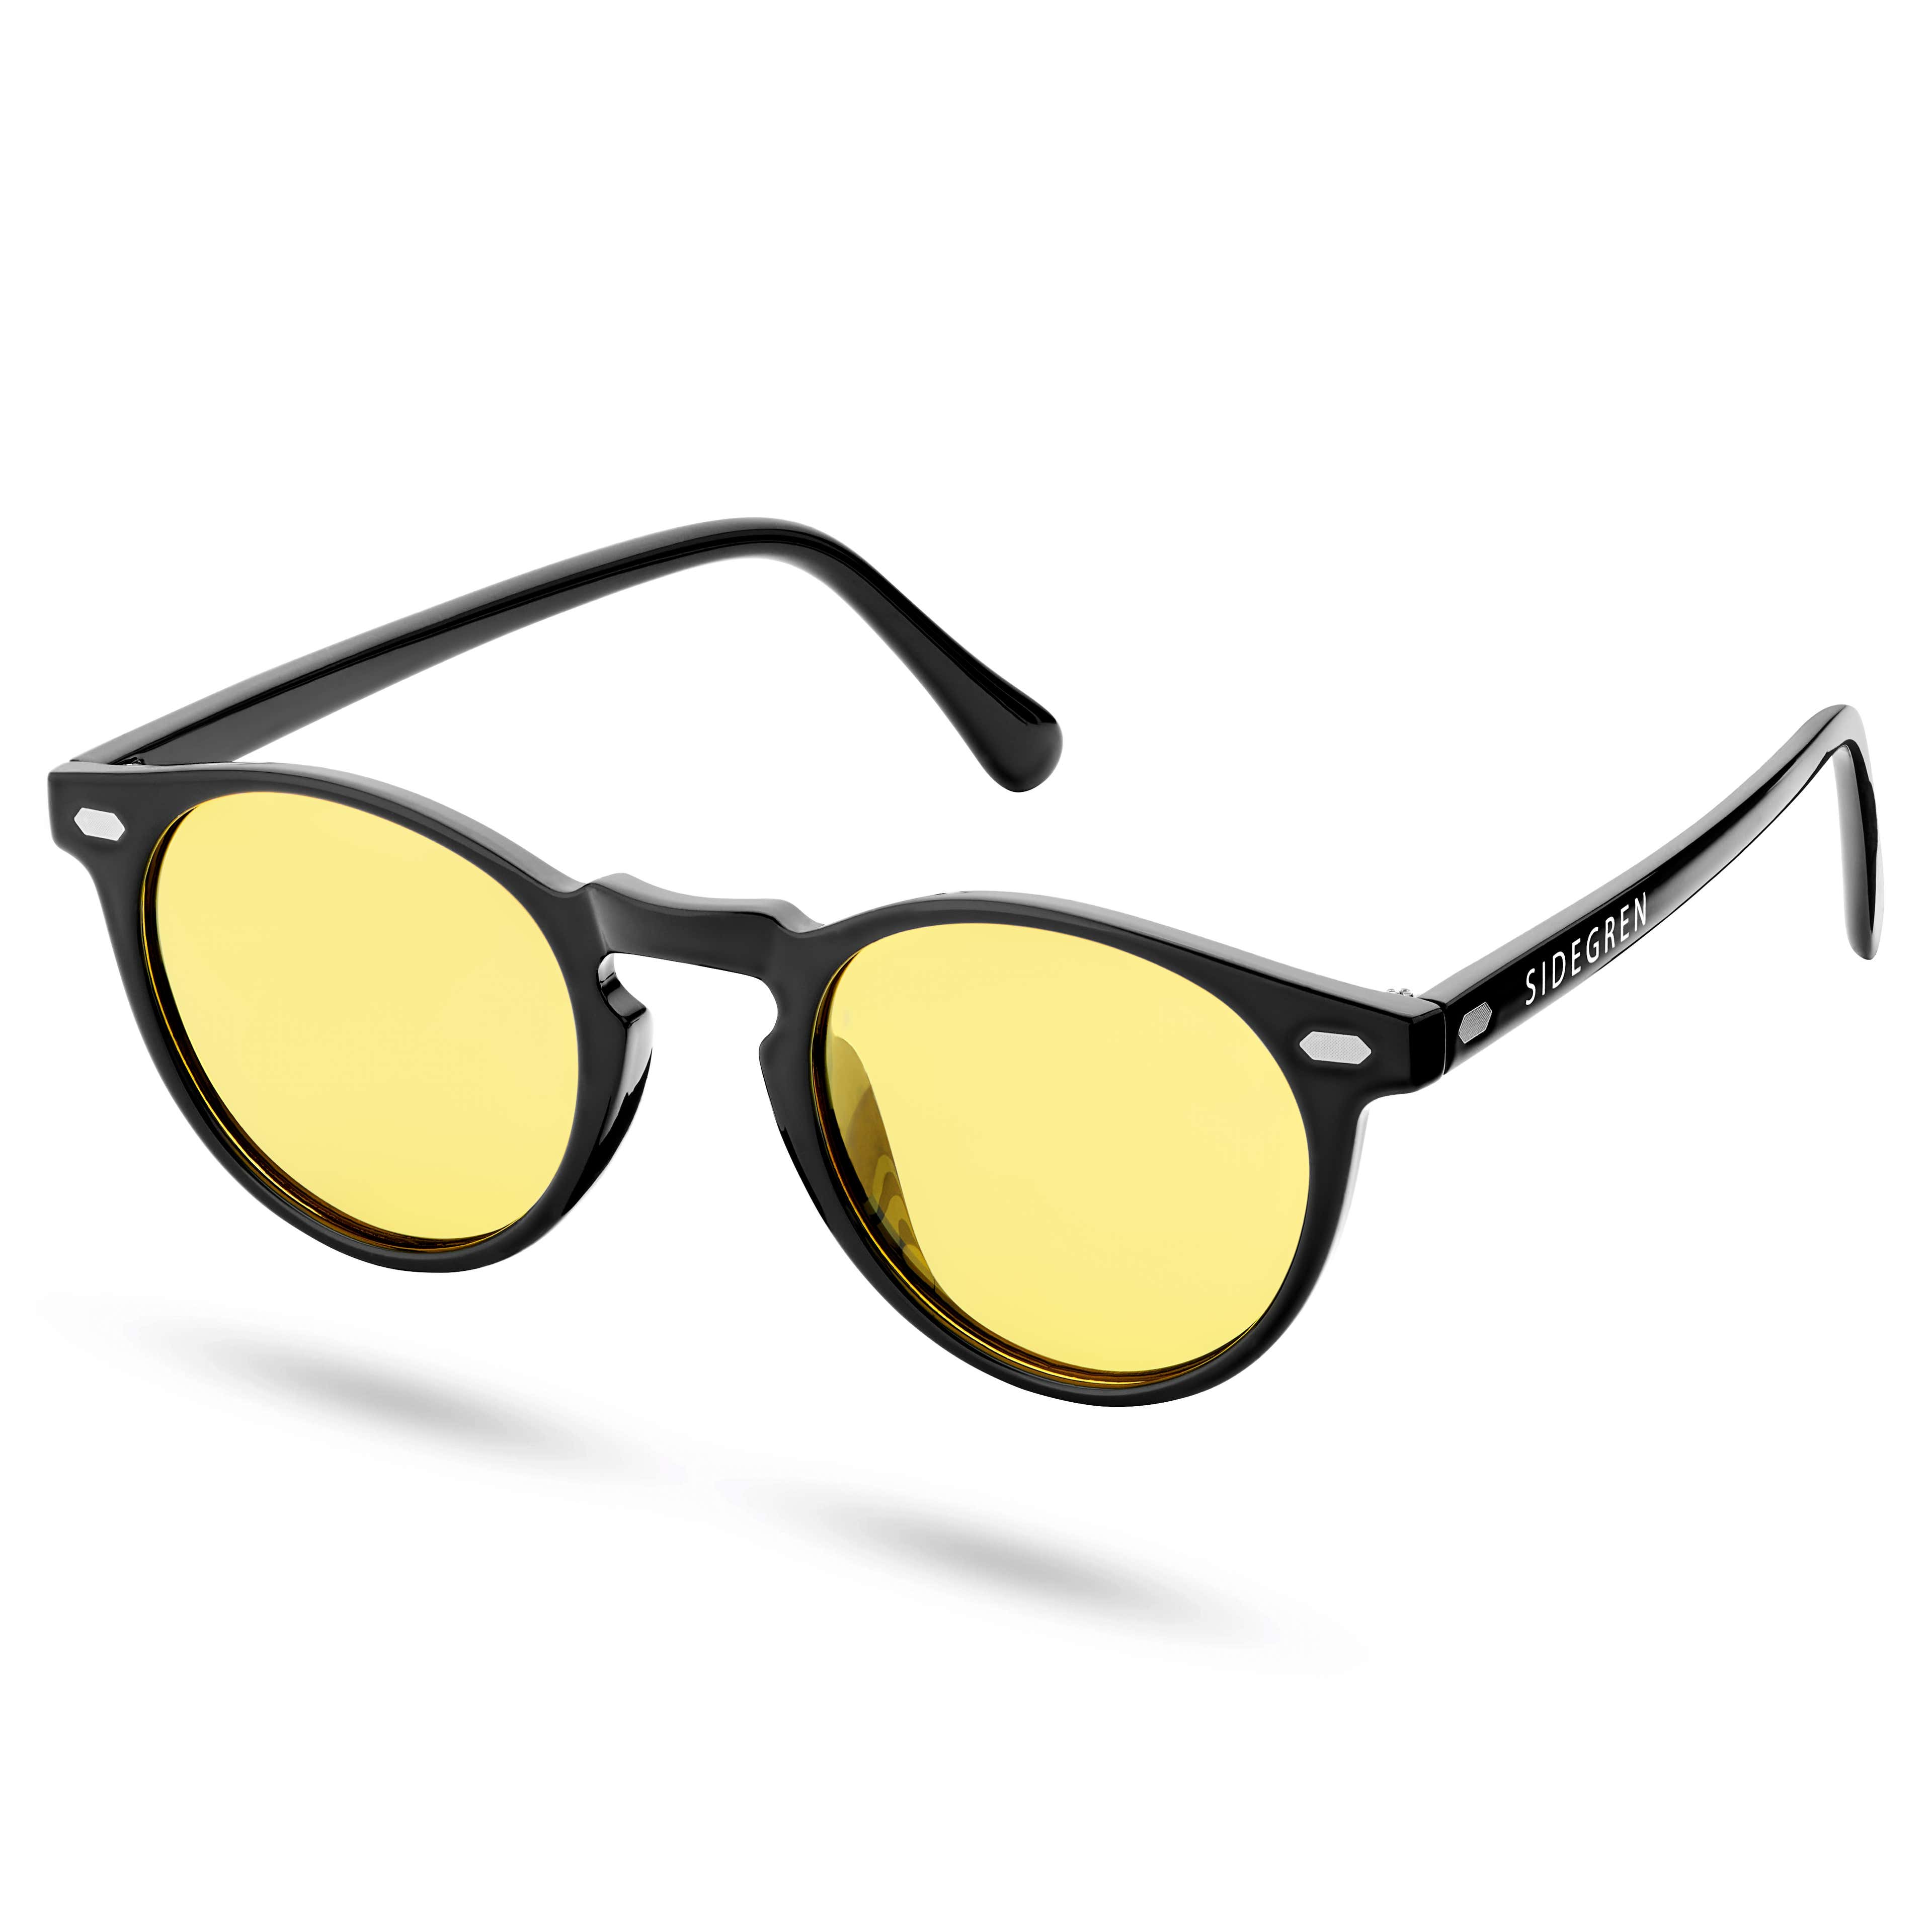 Retro Round Black & Yellow Polarised Sunglasses